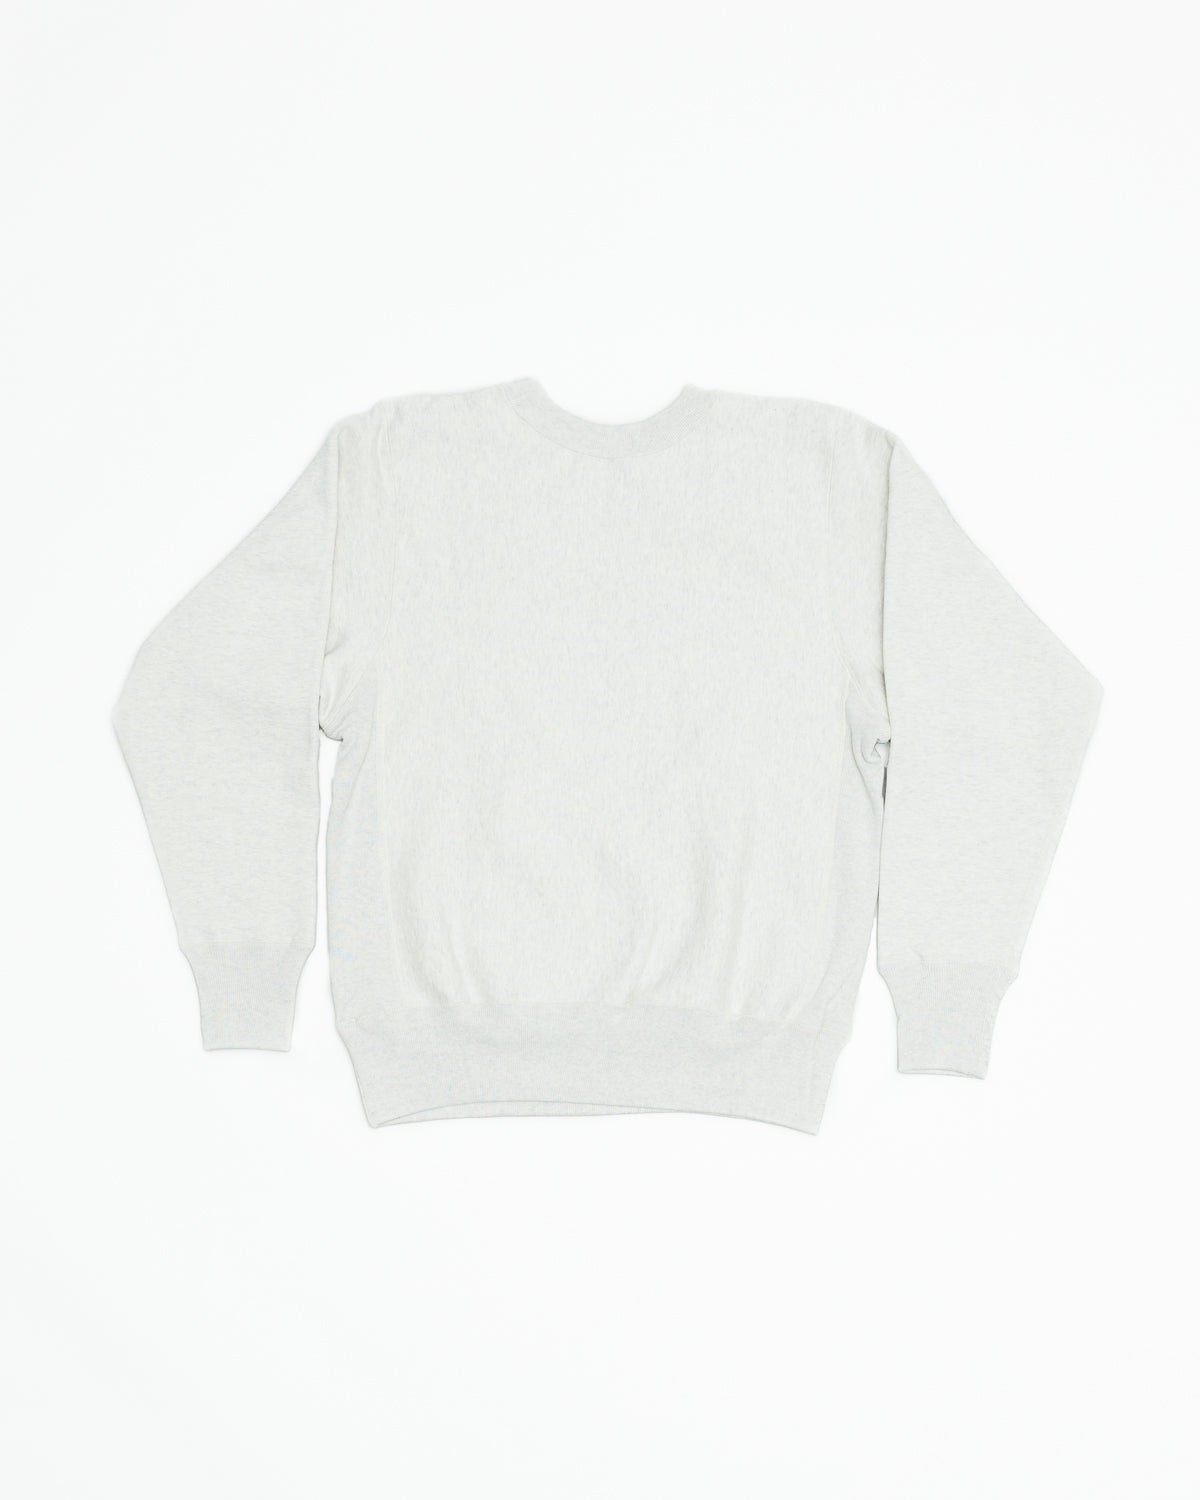 Lot 483 - Heavyweight Sweatshirt Plain - Oatmeal